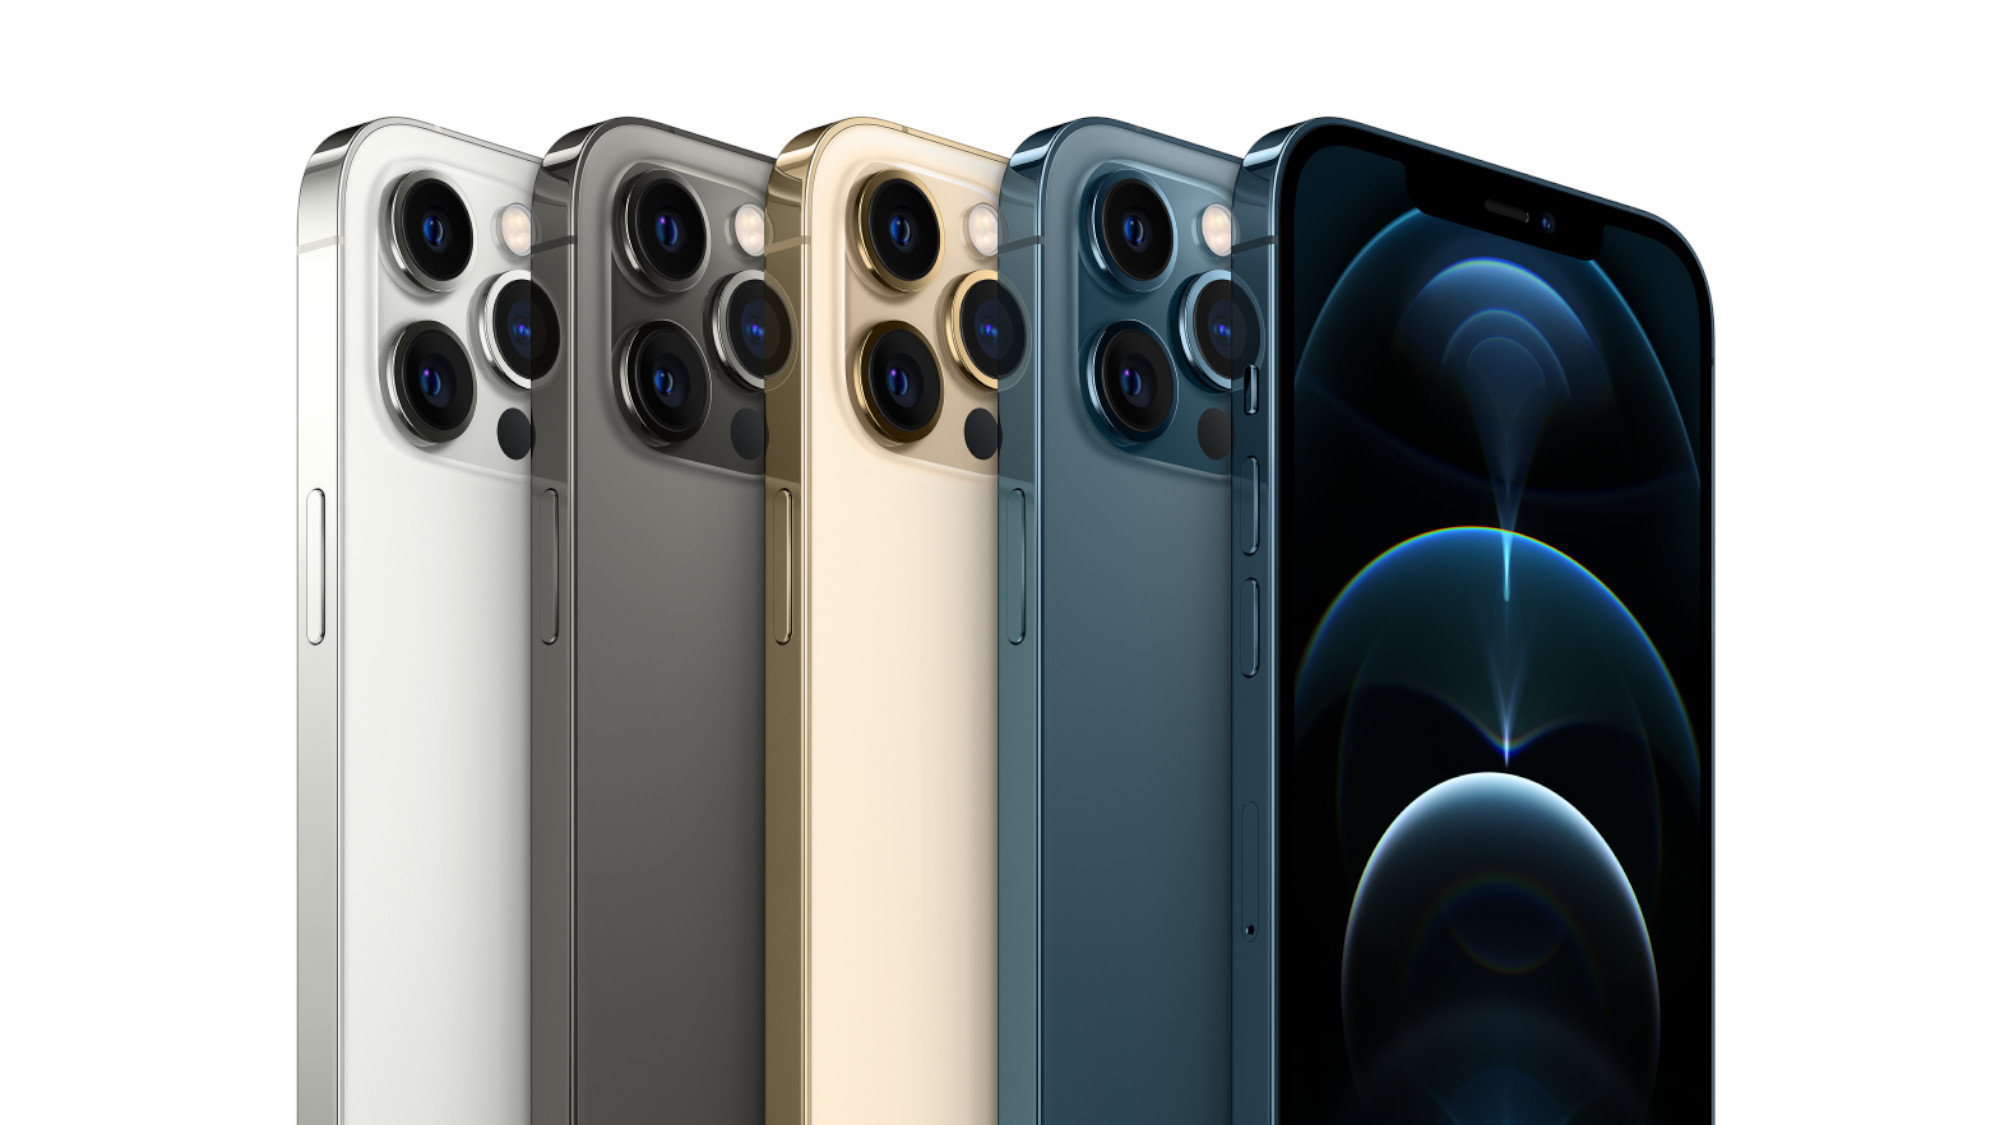 iPhone 12 Pro Max deals preorder apple sale